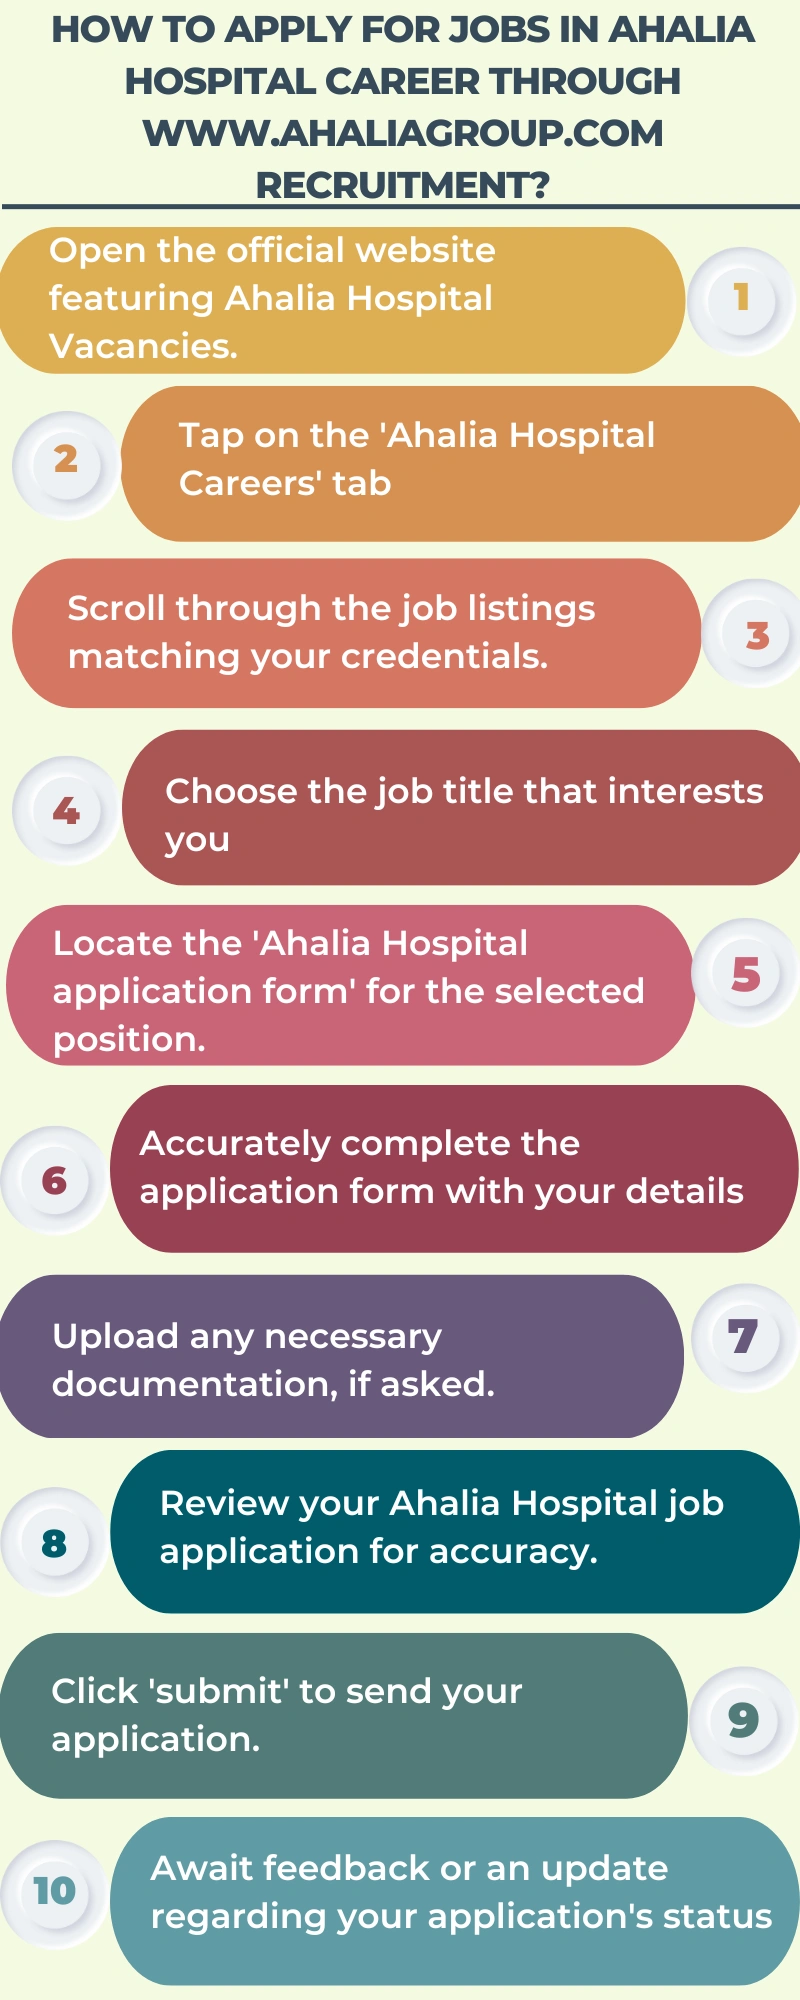 How to Apply for Jobs in Ahalia Hospital Career through www.ahaliagroup.com recruitment?